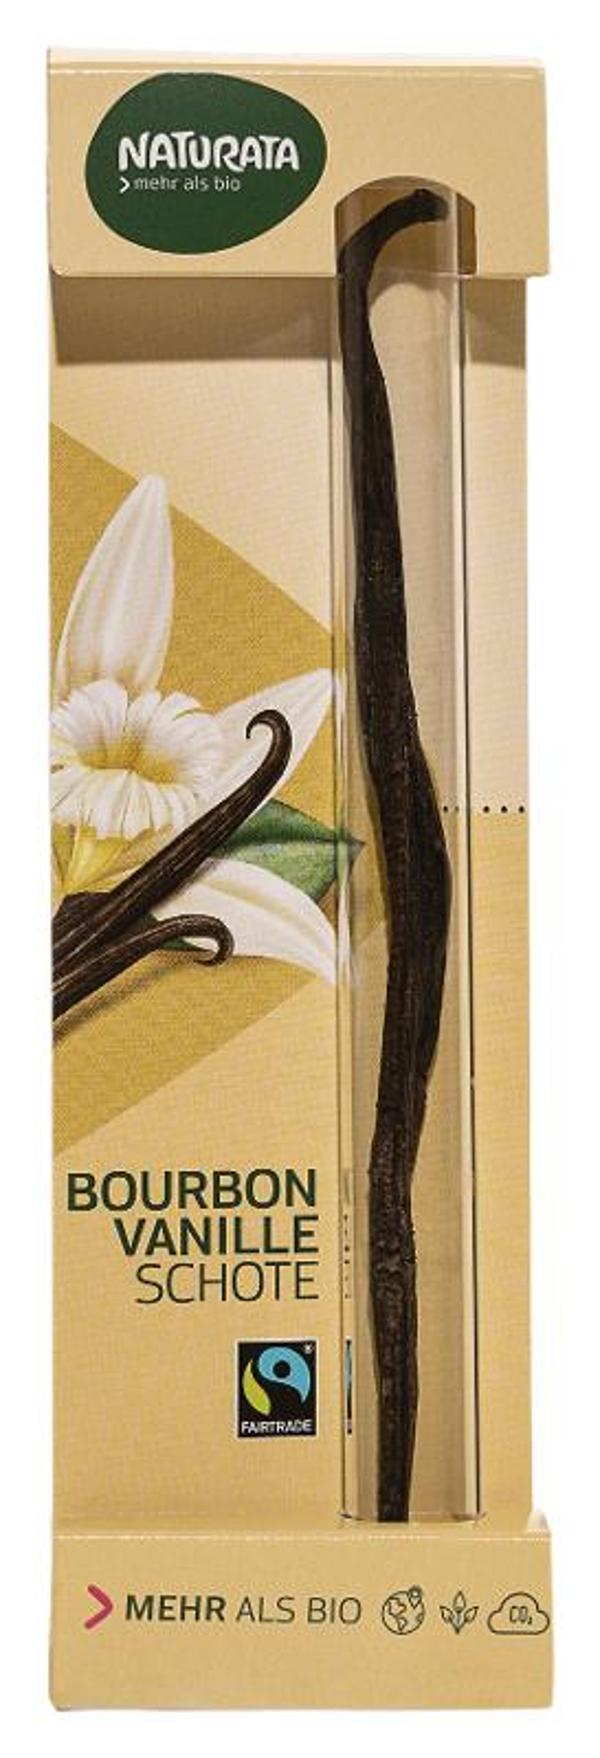 Produktfoto zu Bourbon Vanilleschote